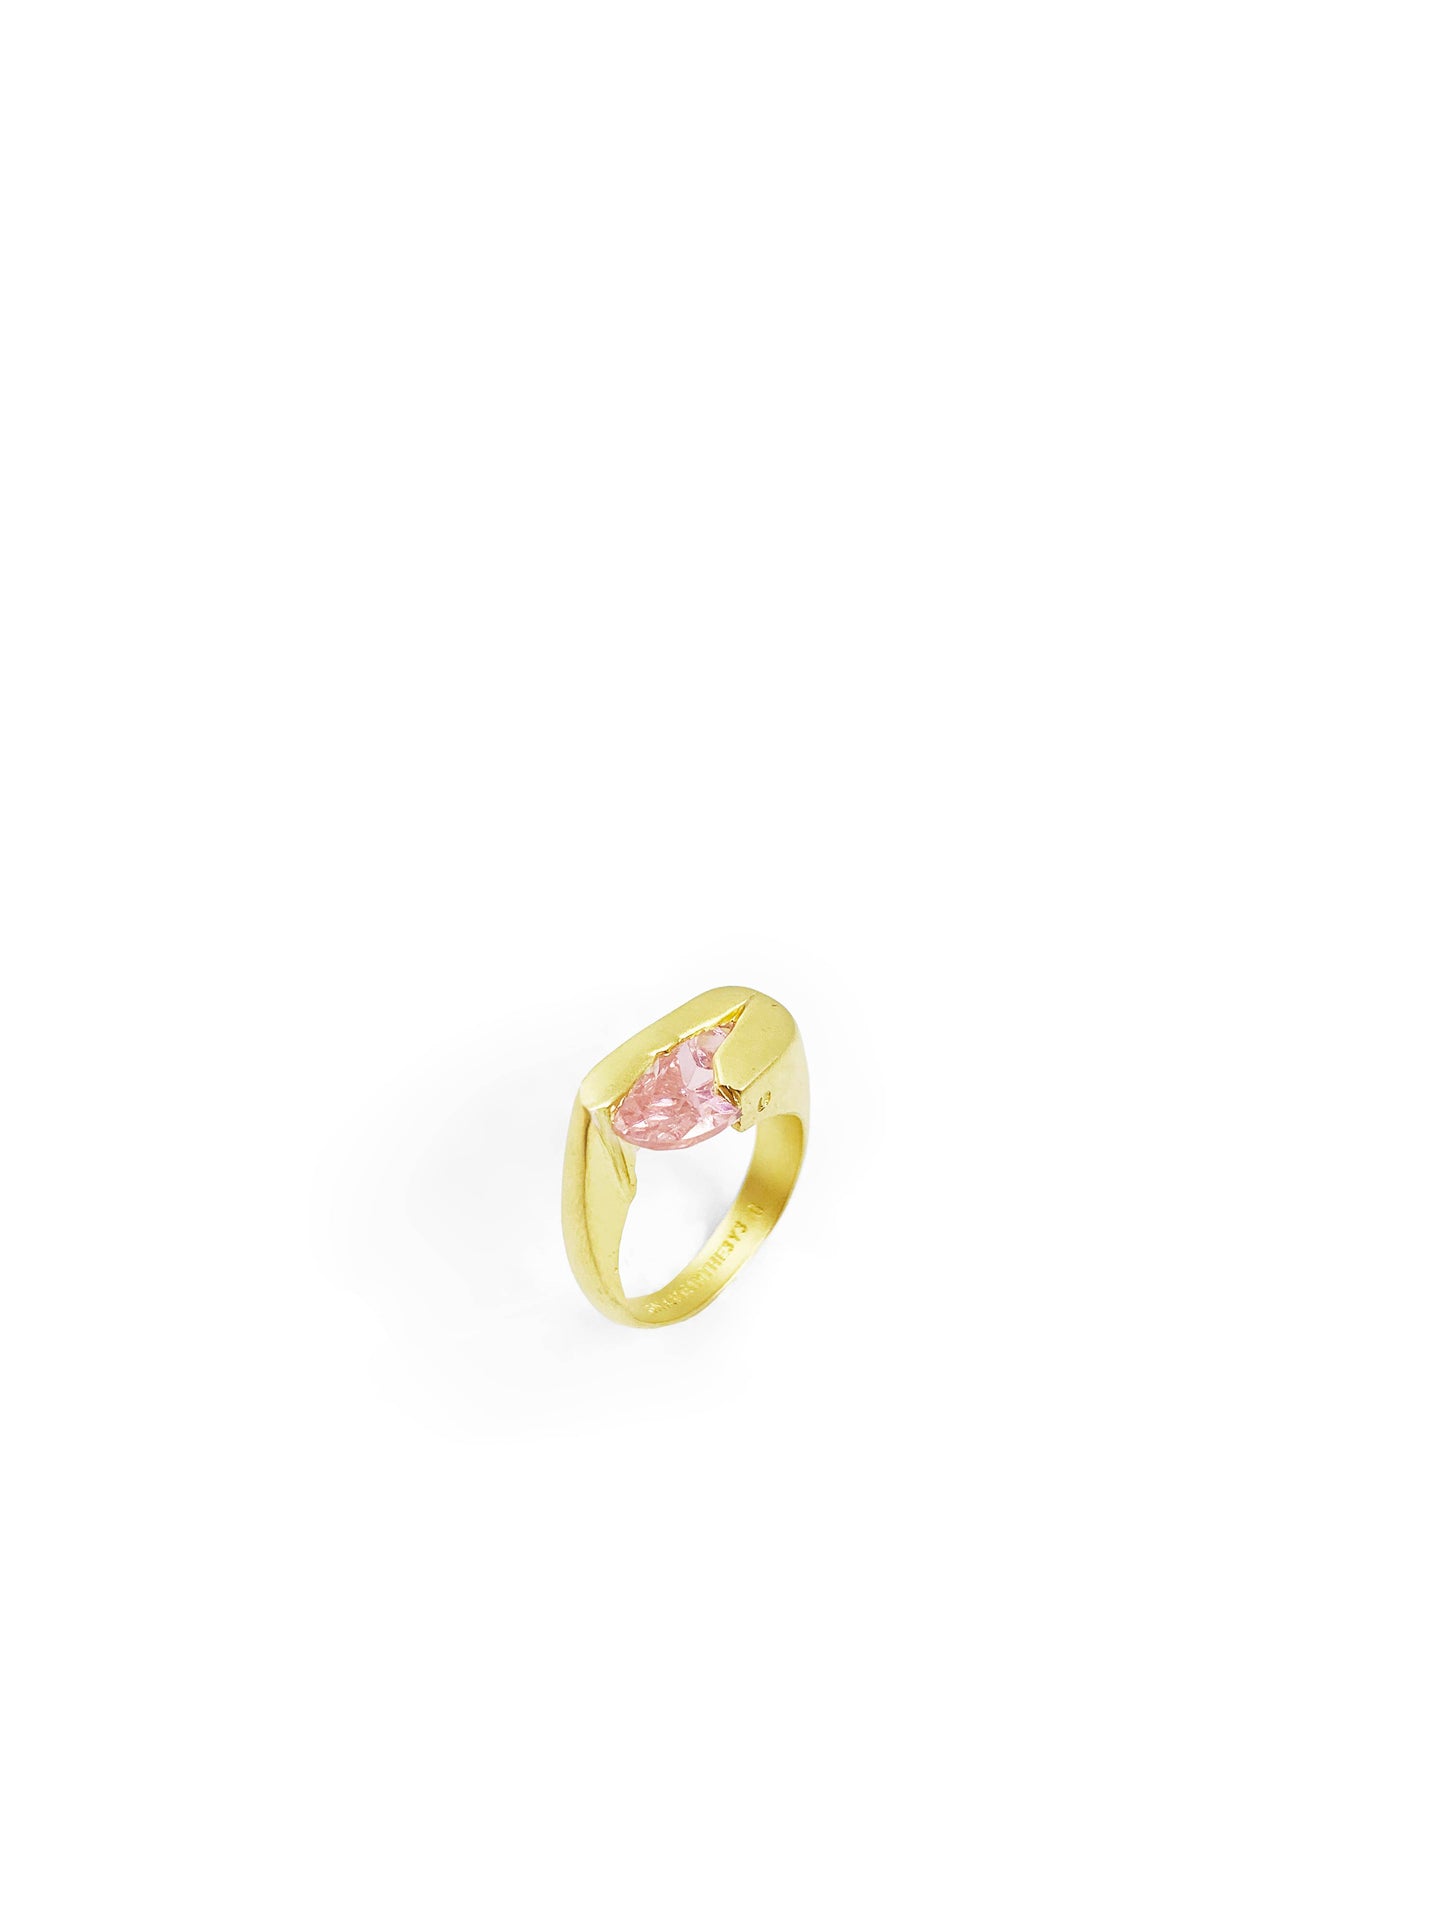 PINK STONE IN BROKEN BRICK - 14k gold pinky ring